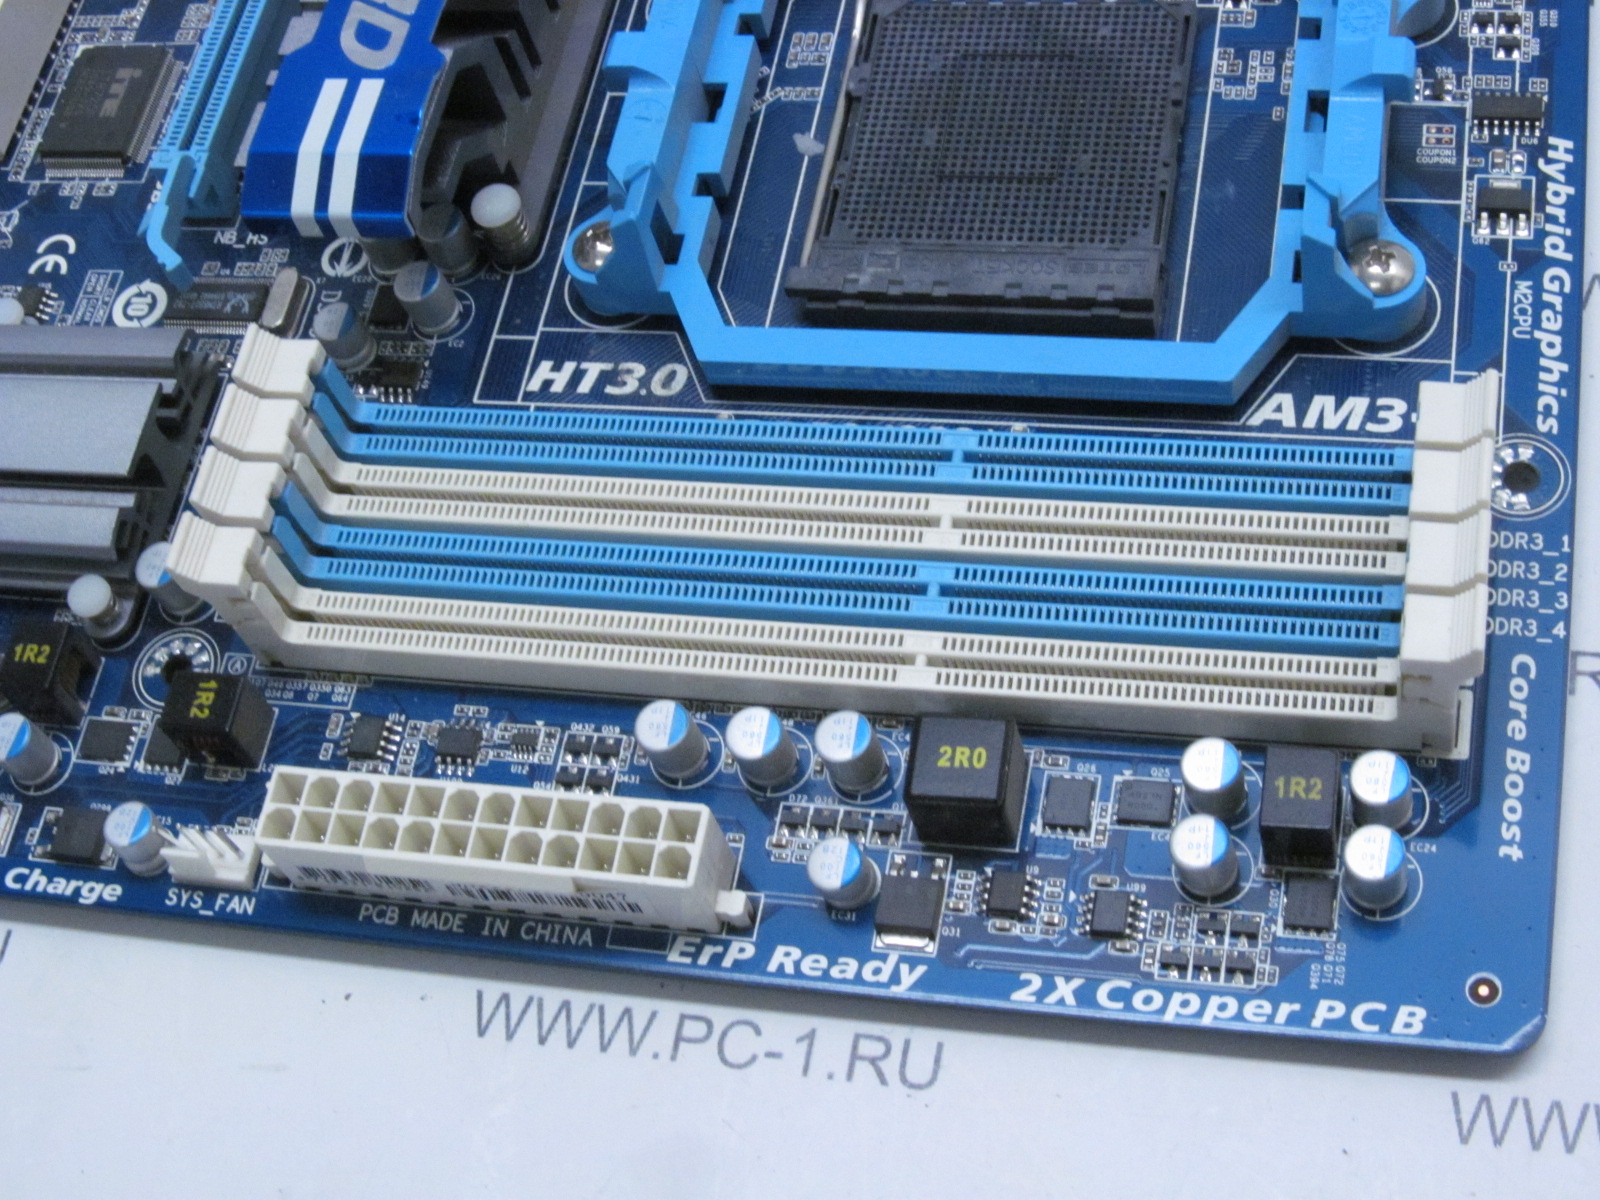 Материнская плата MB Gigabyte GA-880GMA-USB3 /Socket AM3+ /PCI-E x16 /2xPCI-E x1 /PCI /6xSATA 3.0 (6 Gb/s) /4xDDR3 /Sound /LAN /6xUSB (2x USB 3.0) /VGA /DVI /HDMI /mATX /Заглушка